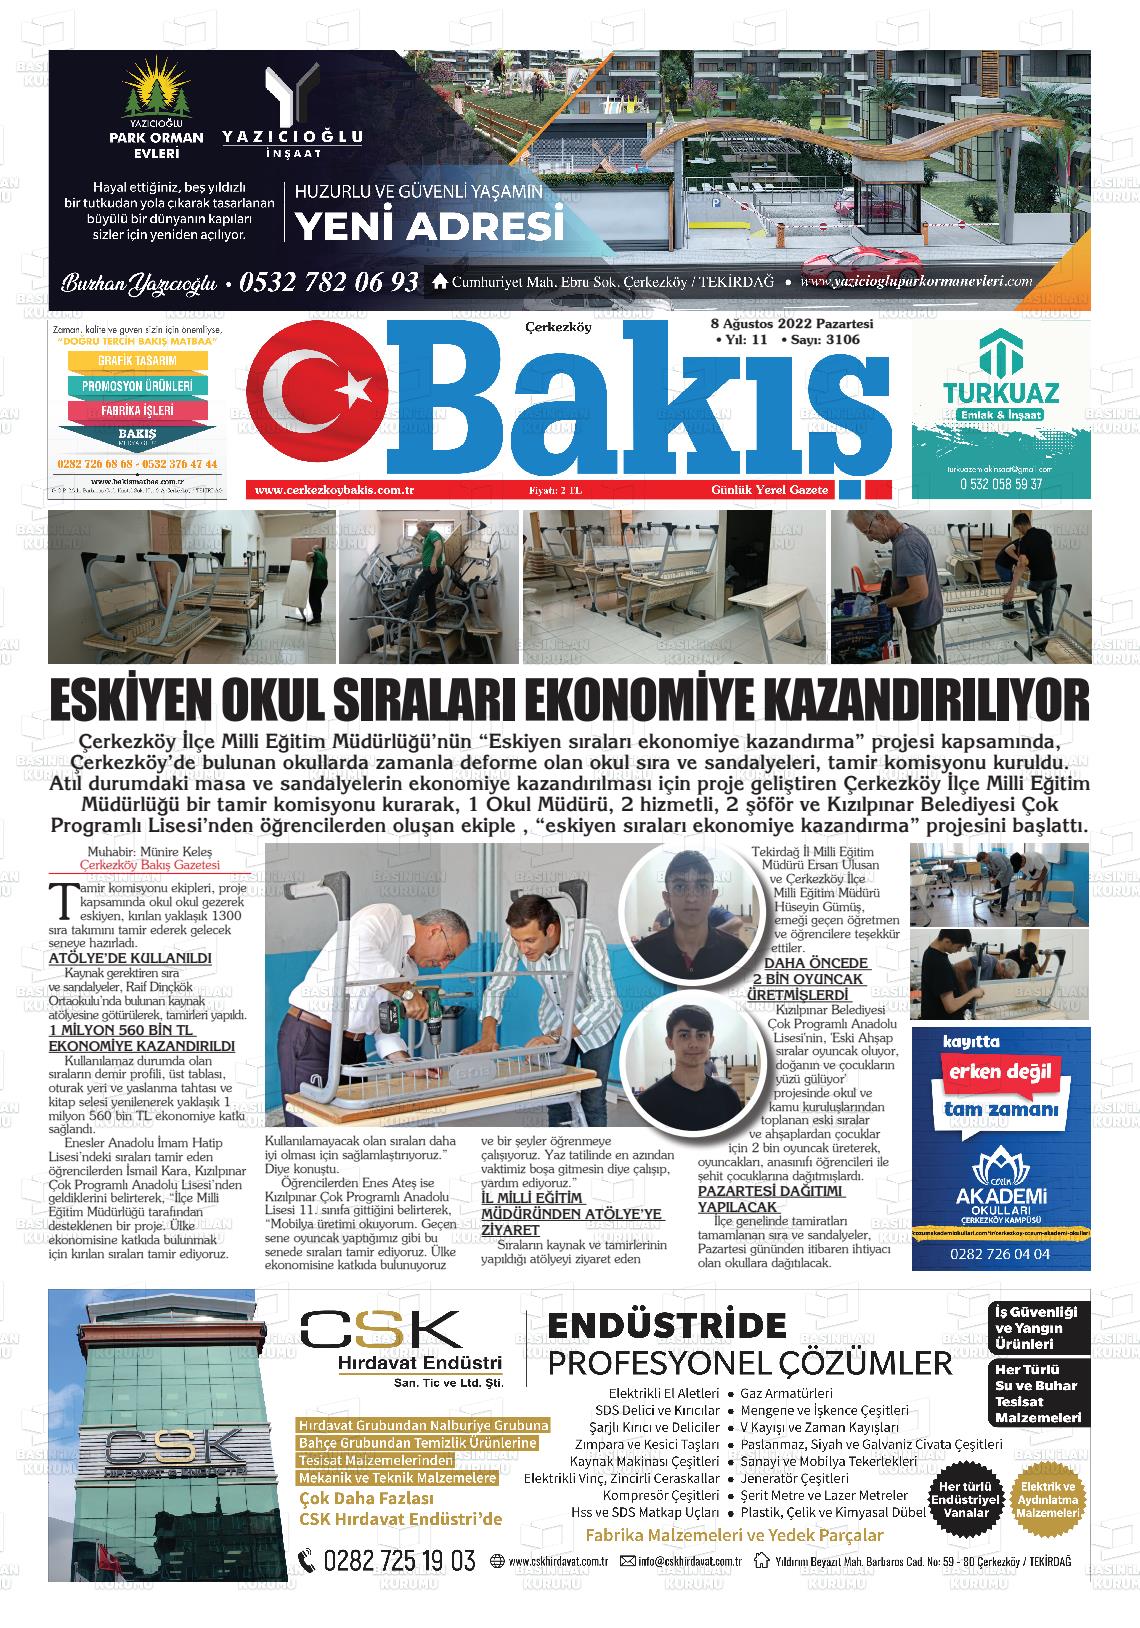 08 Ağustos 2022 Çerkezköy Bakış Gazete Manşeti